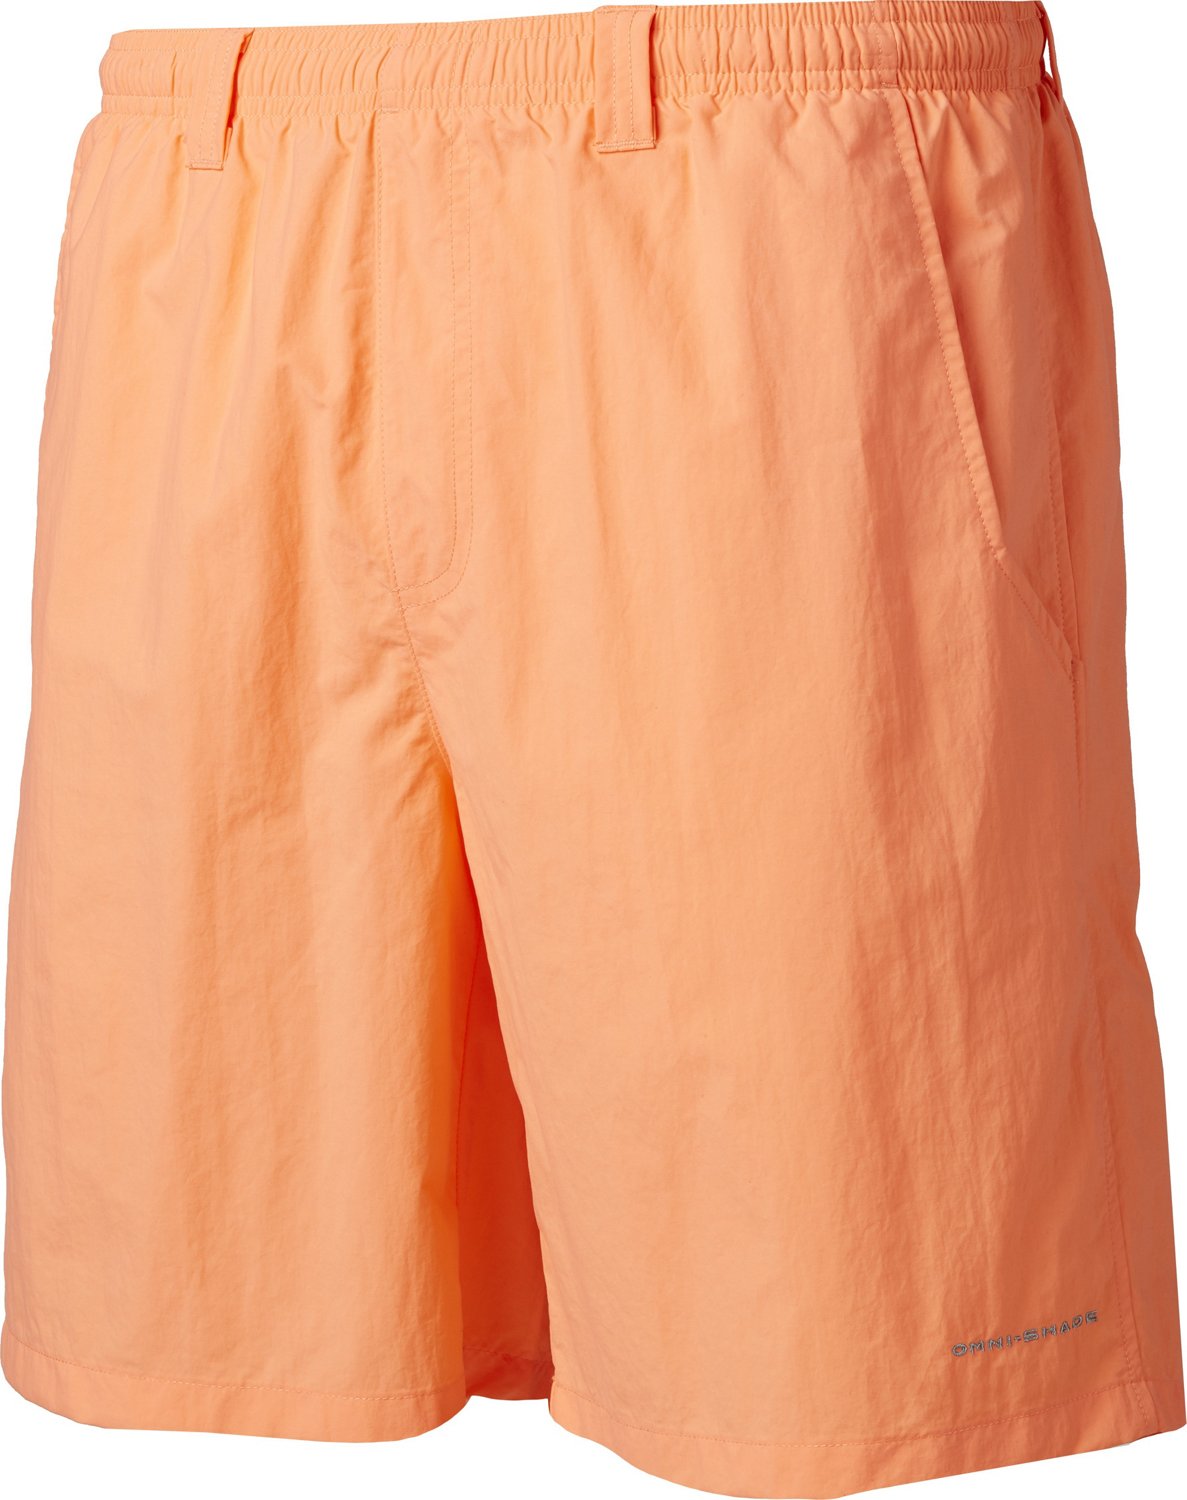 Columbia PFG multi pocket shorts